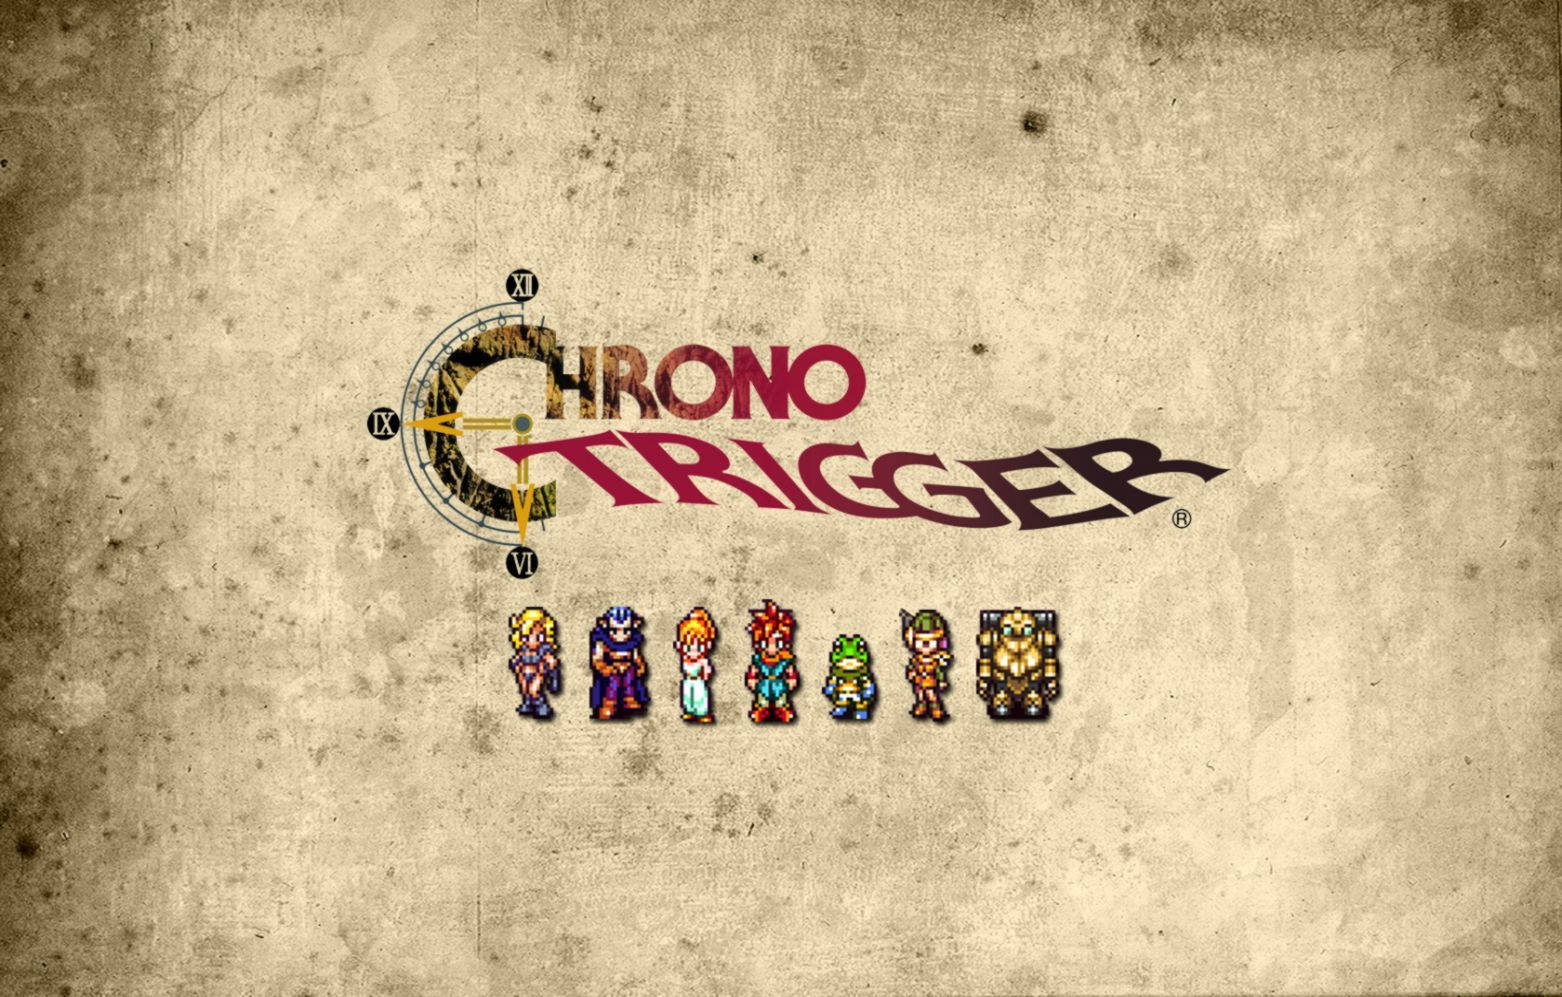 Chrono Trigger Miniature Poster Background